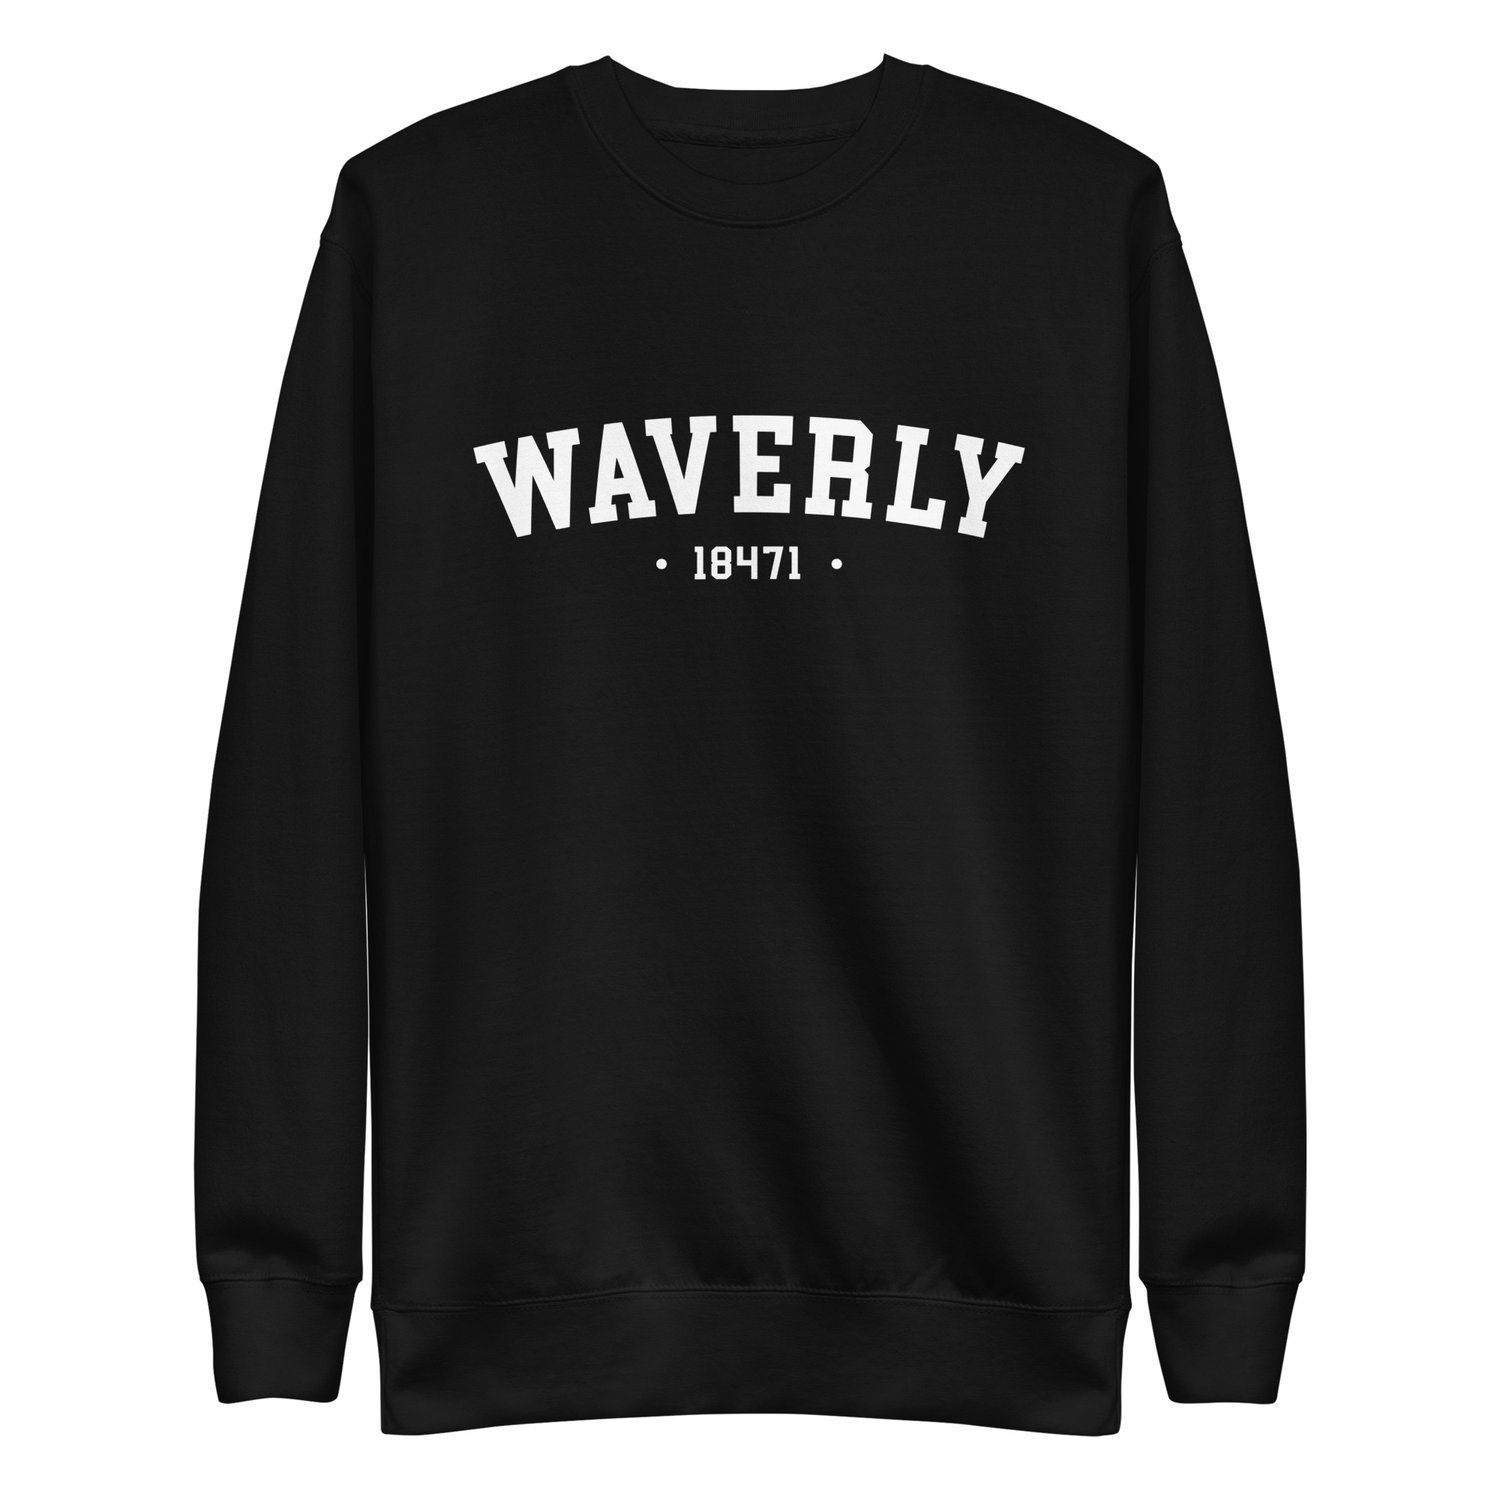 unisex-premium-sweatshirt-black-front-6630ed4b5f9f6.jpg